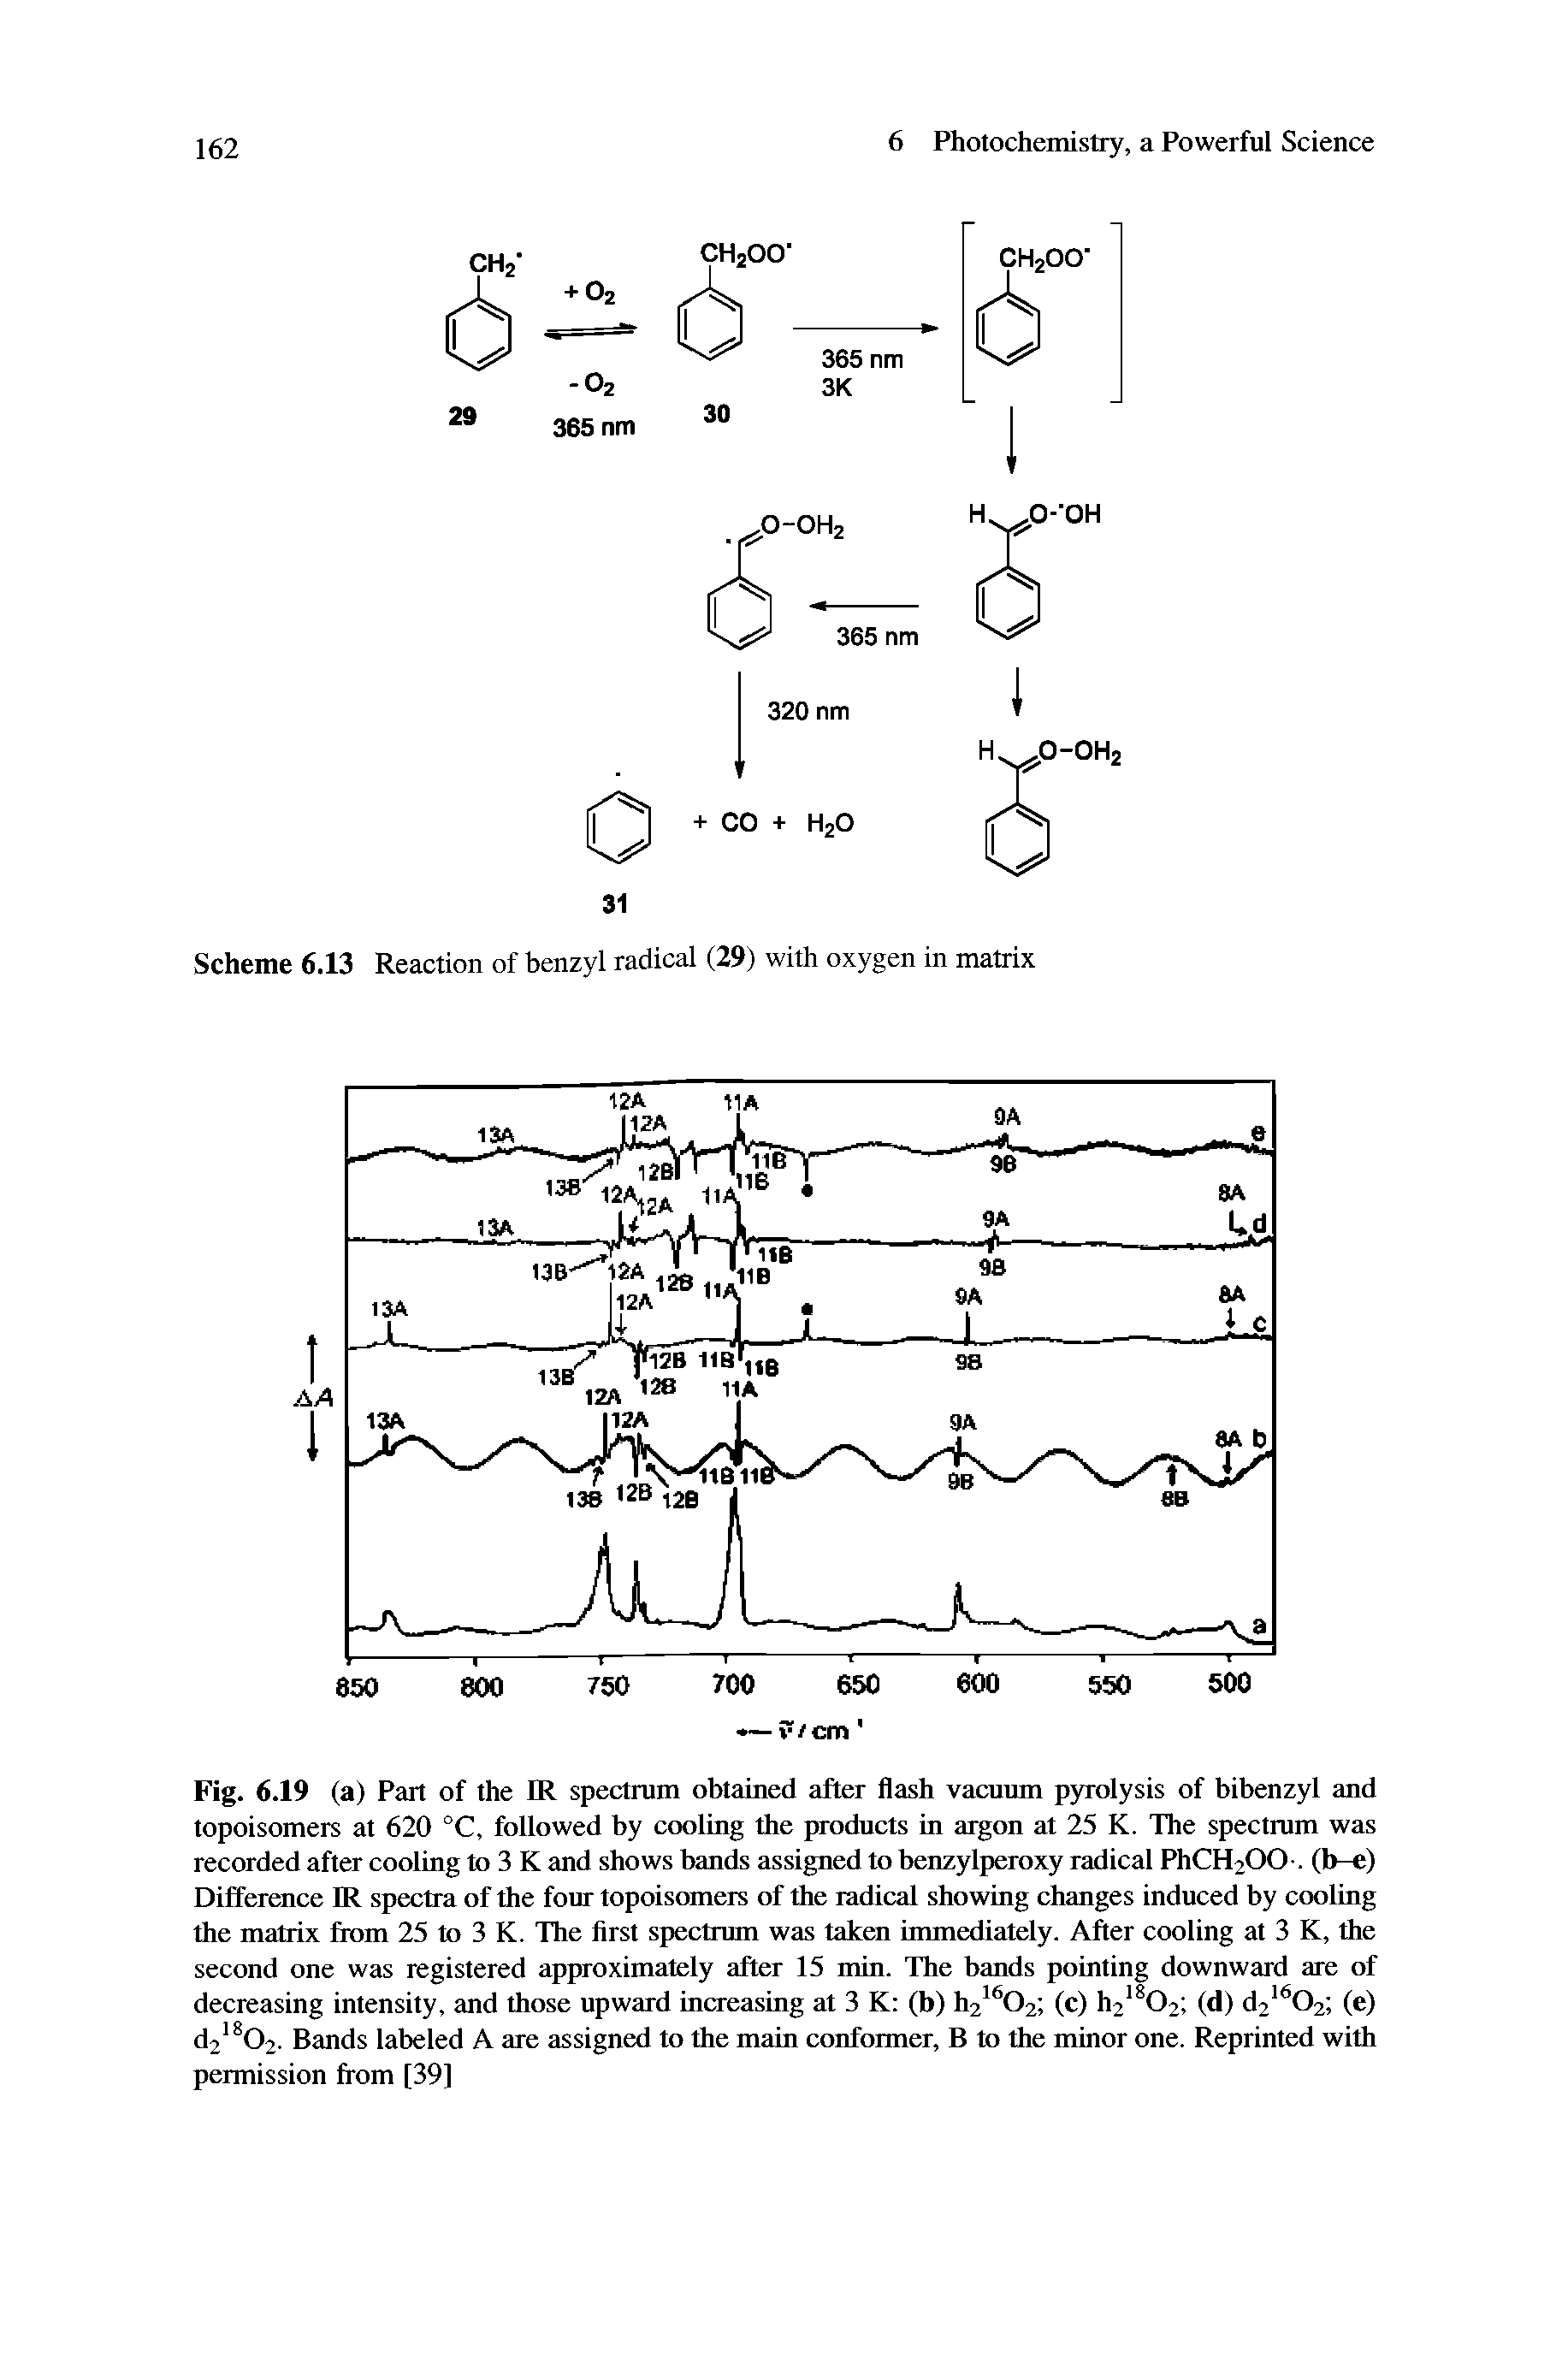 Scheme 6.13 Reaction of benzyl radical (29) with oxygen in matrix...